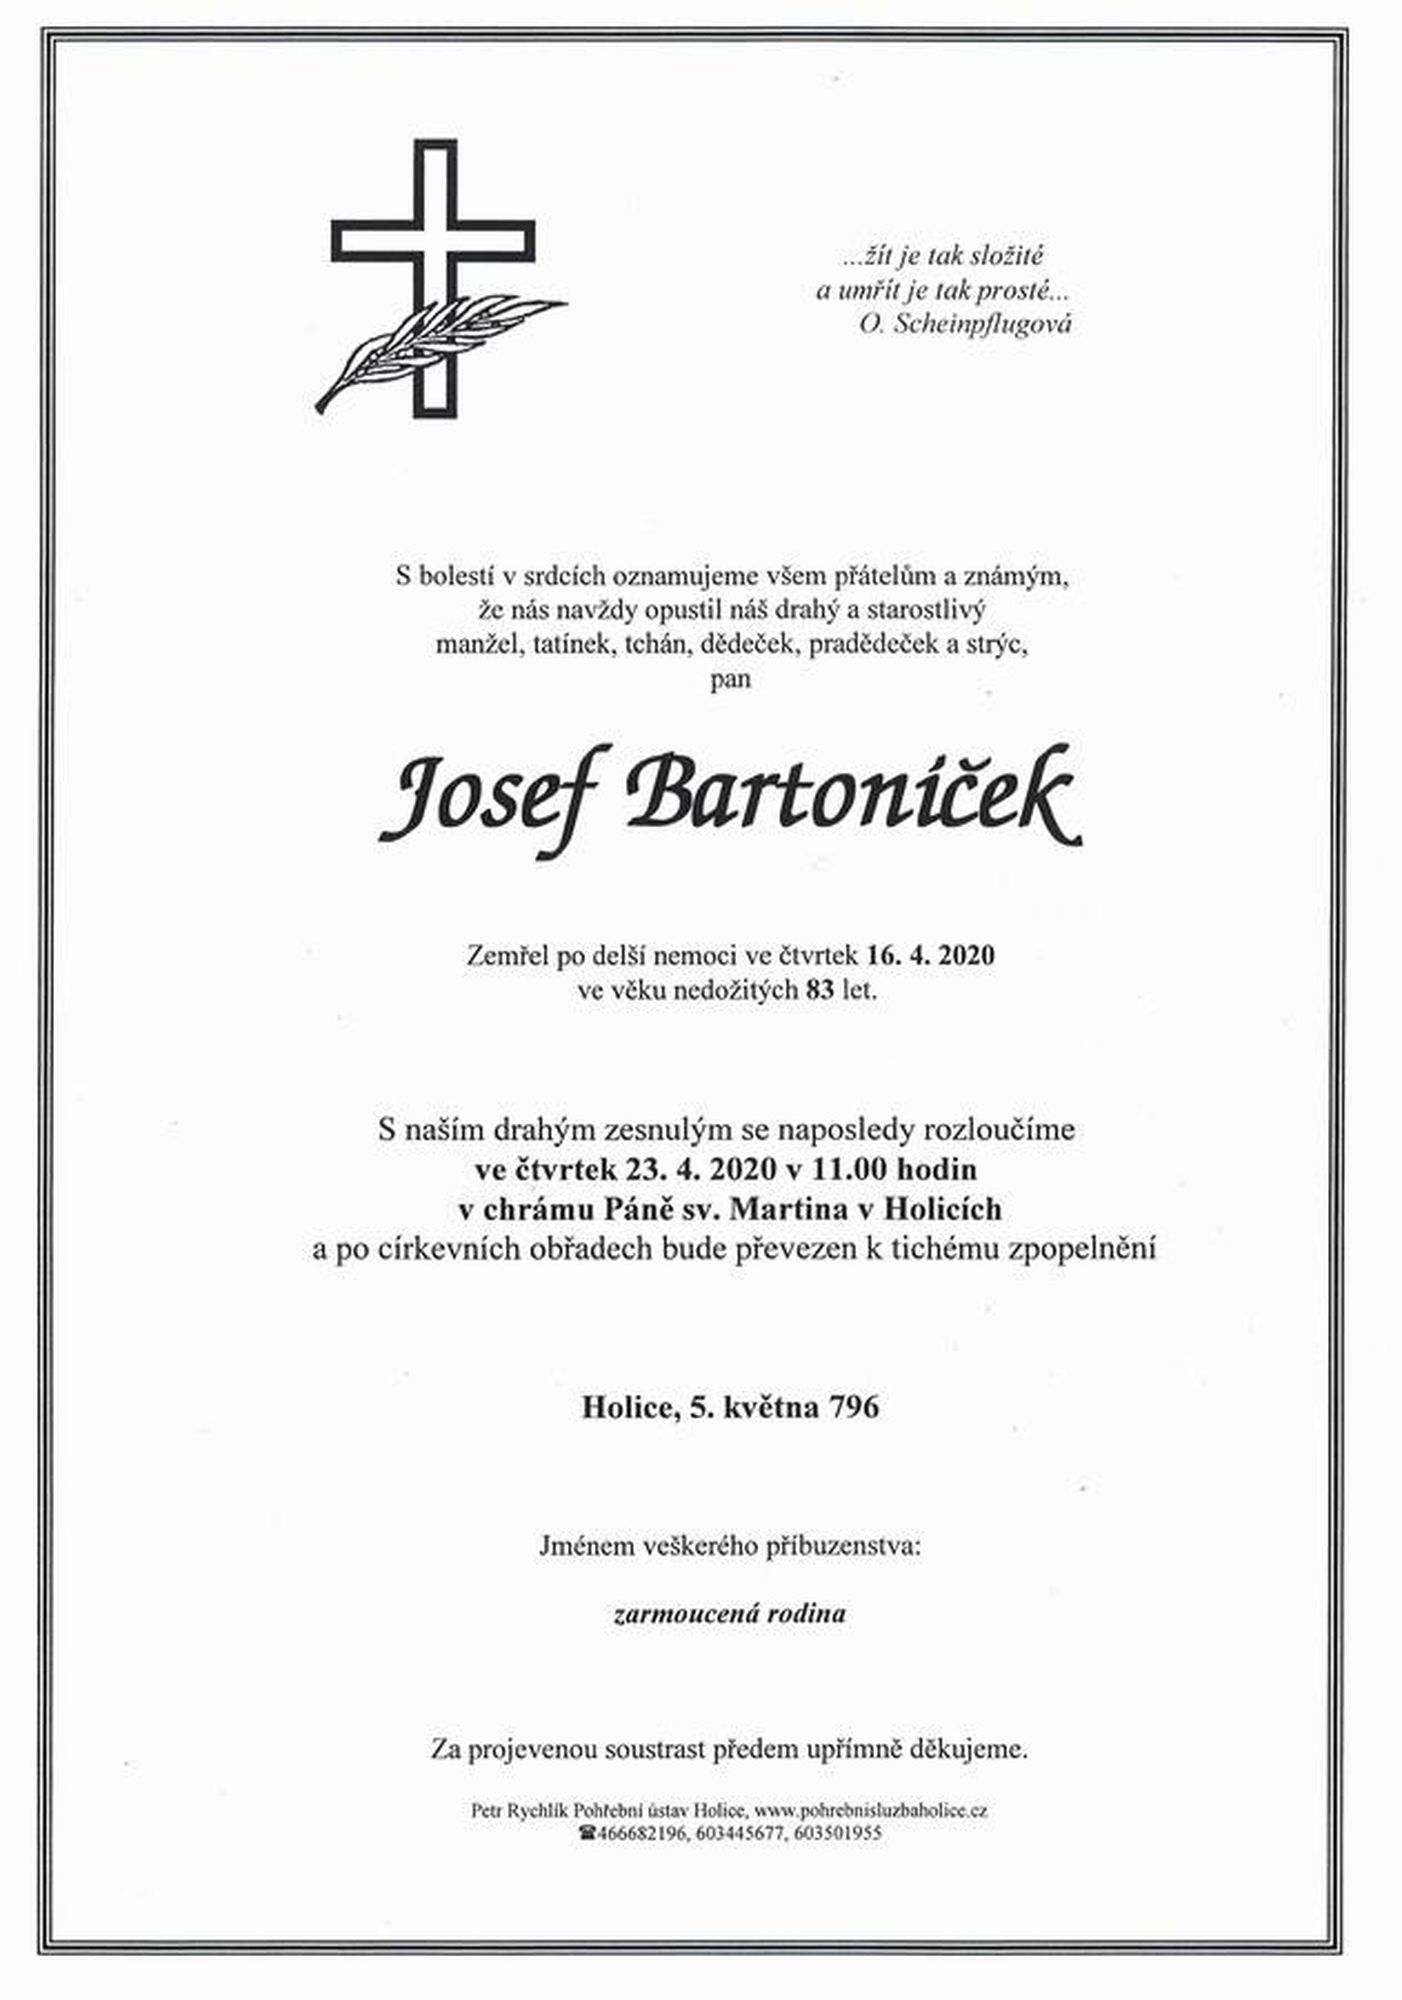 Josef Bartoníček